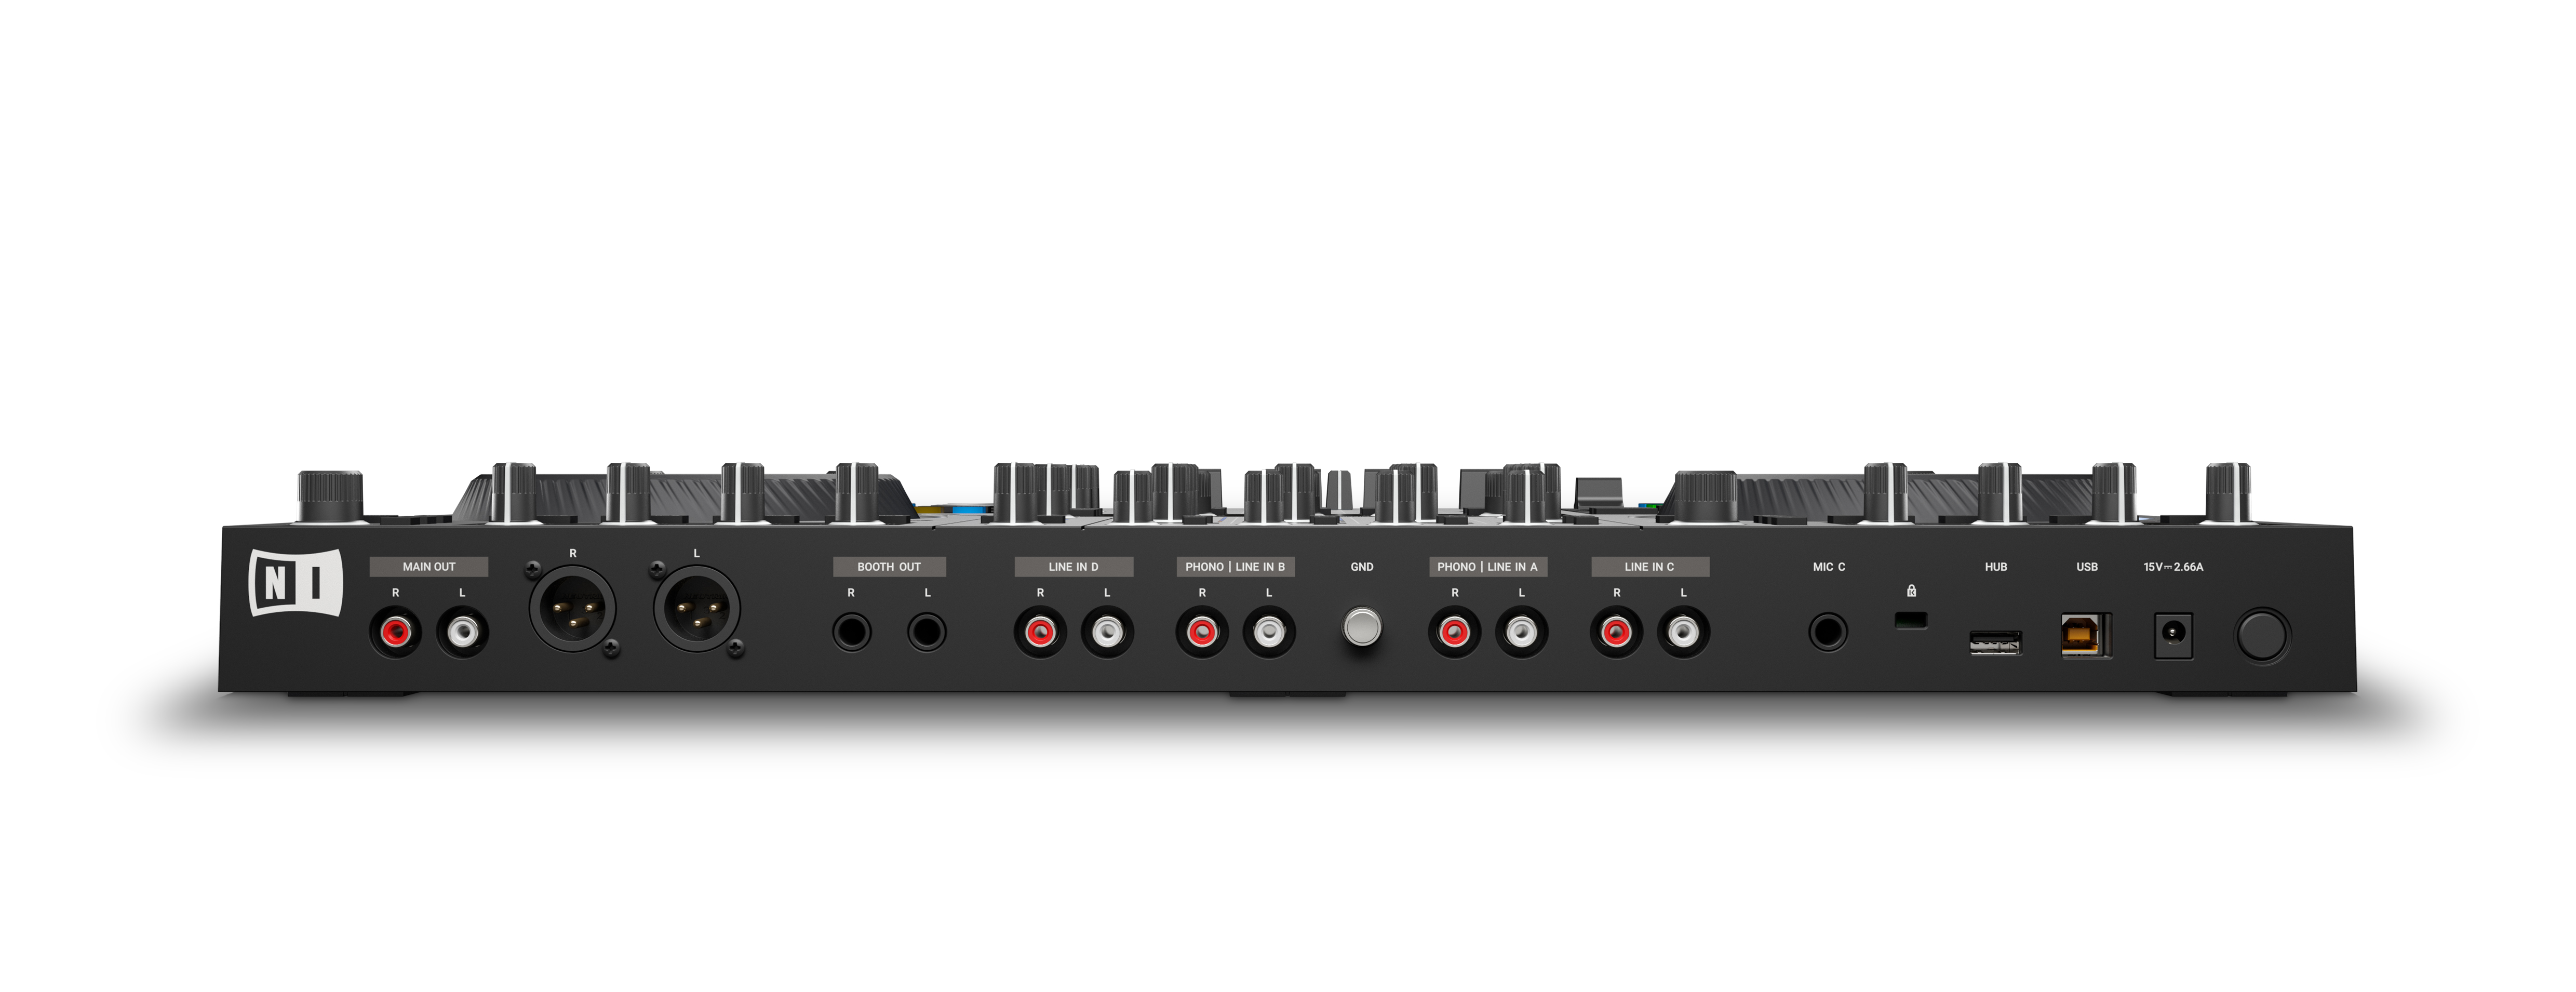 Native Instruments Traktor Kontrol S4 Mk3 - USB DJ controller - Variation 5